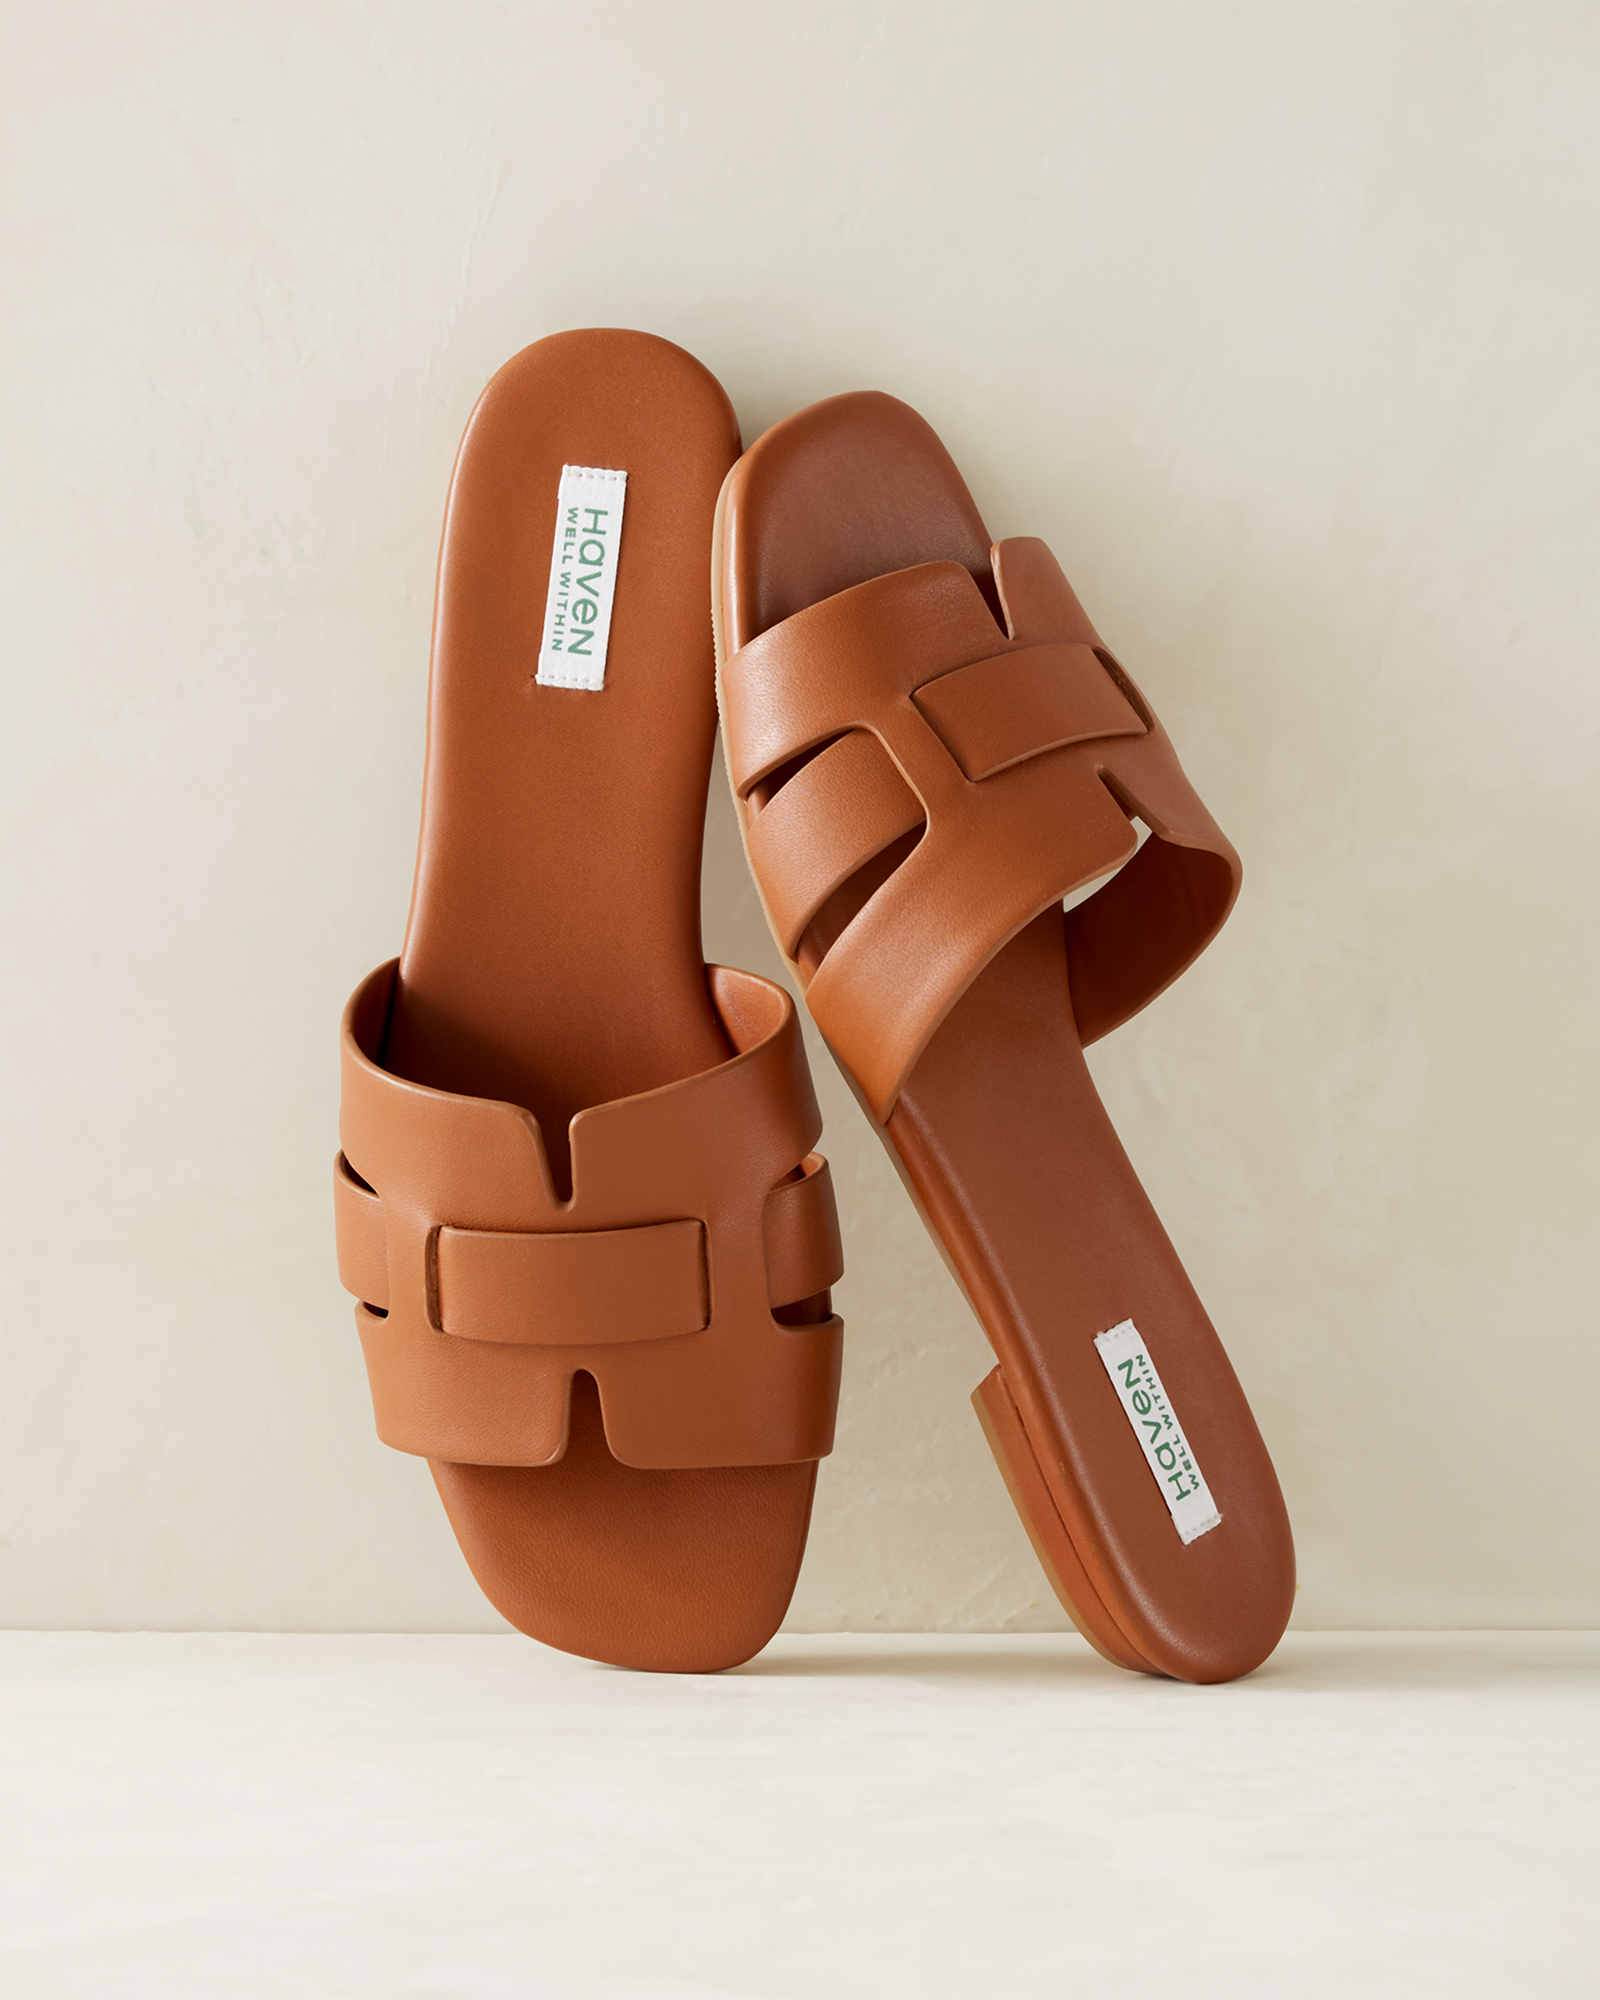 Talbots Leather Woven Sandals - Cognac - 8